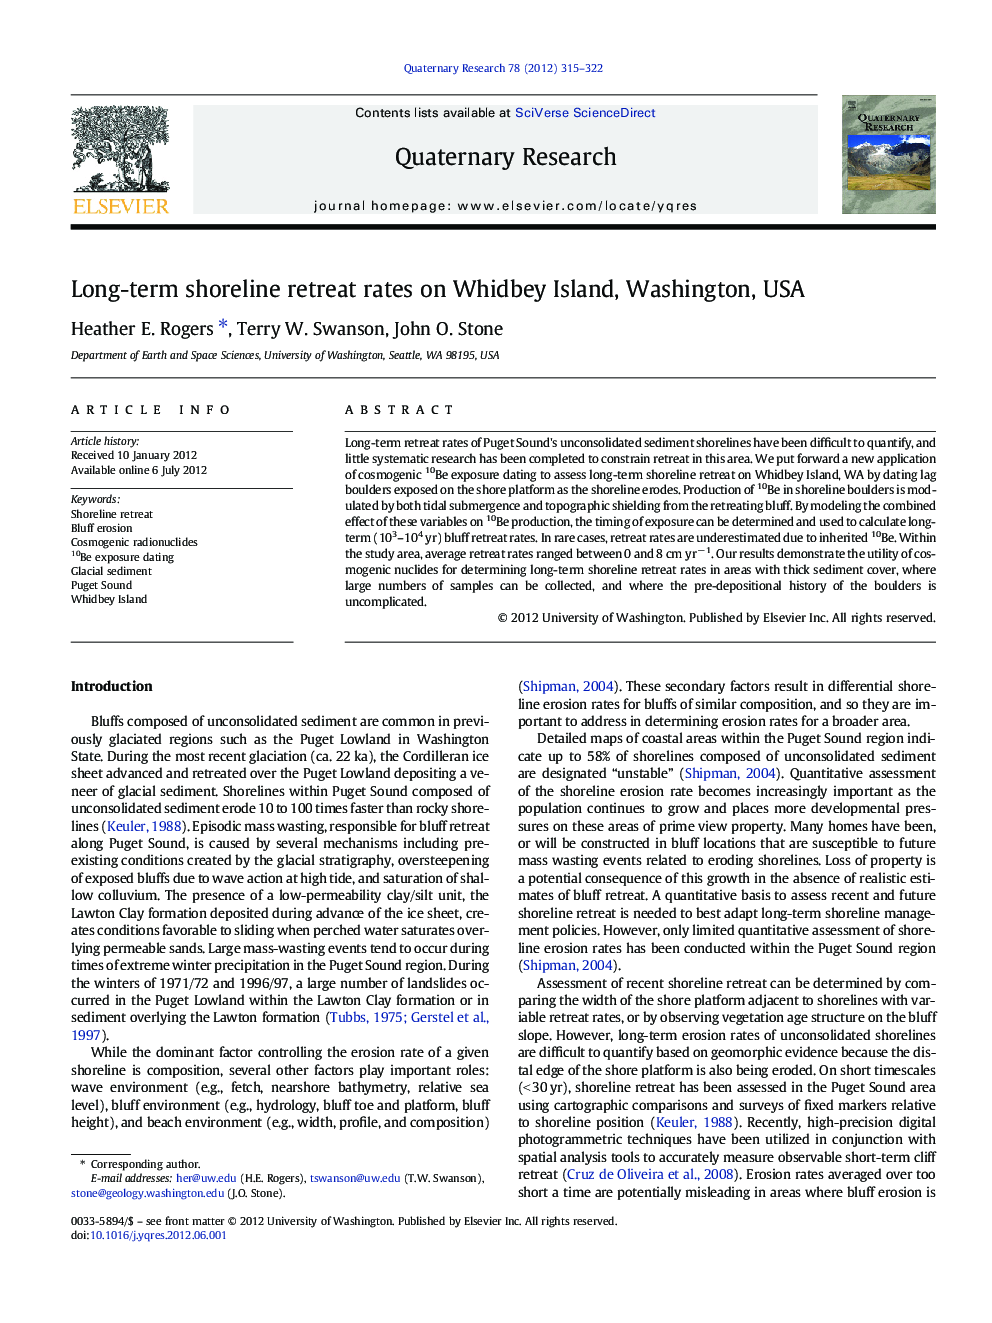 Long-term shoreline retreat rates on Whidbey Island, Washington, USA